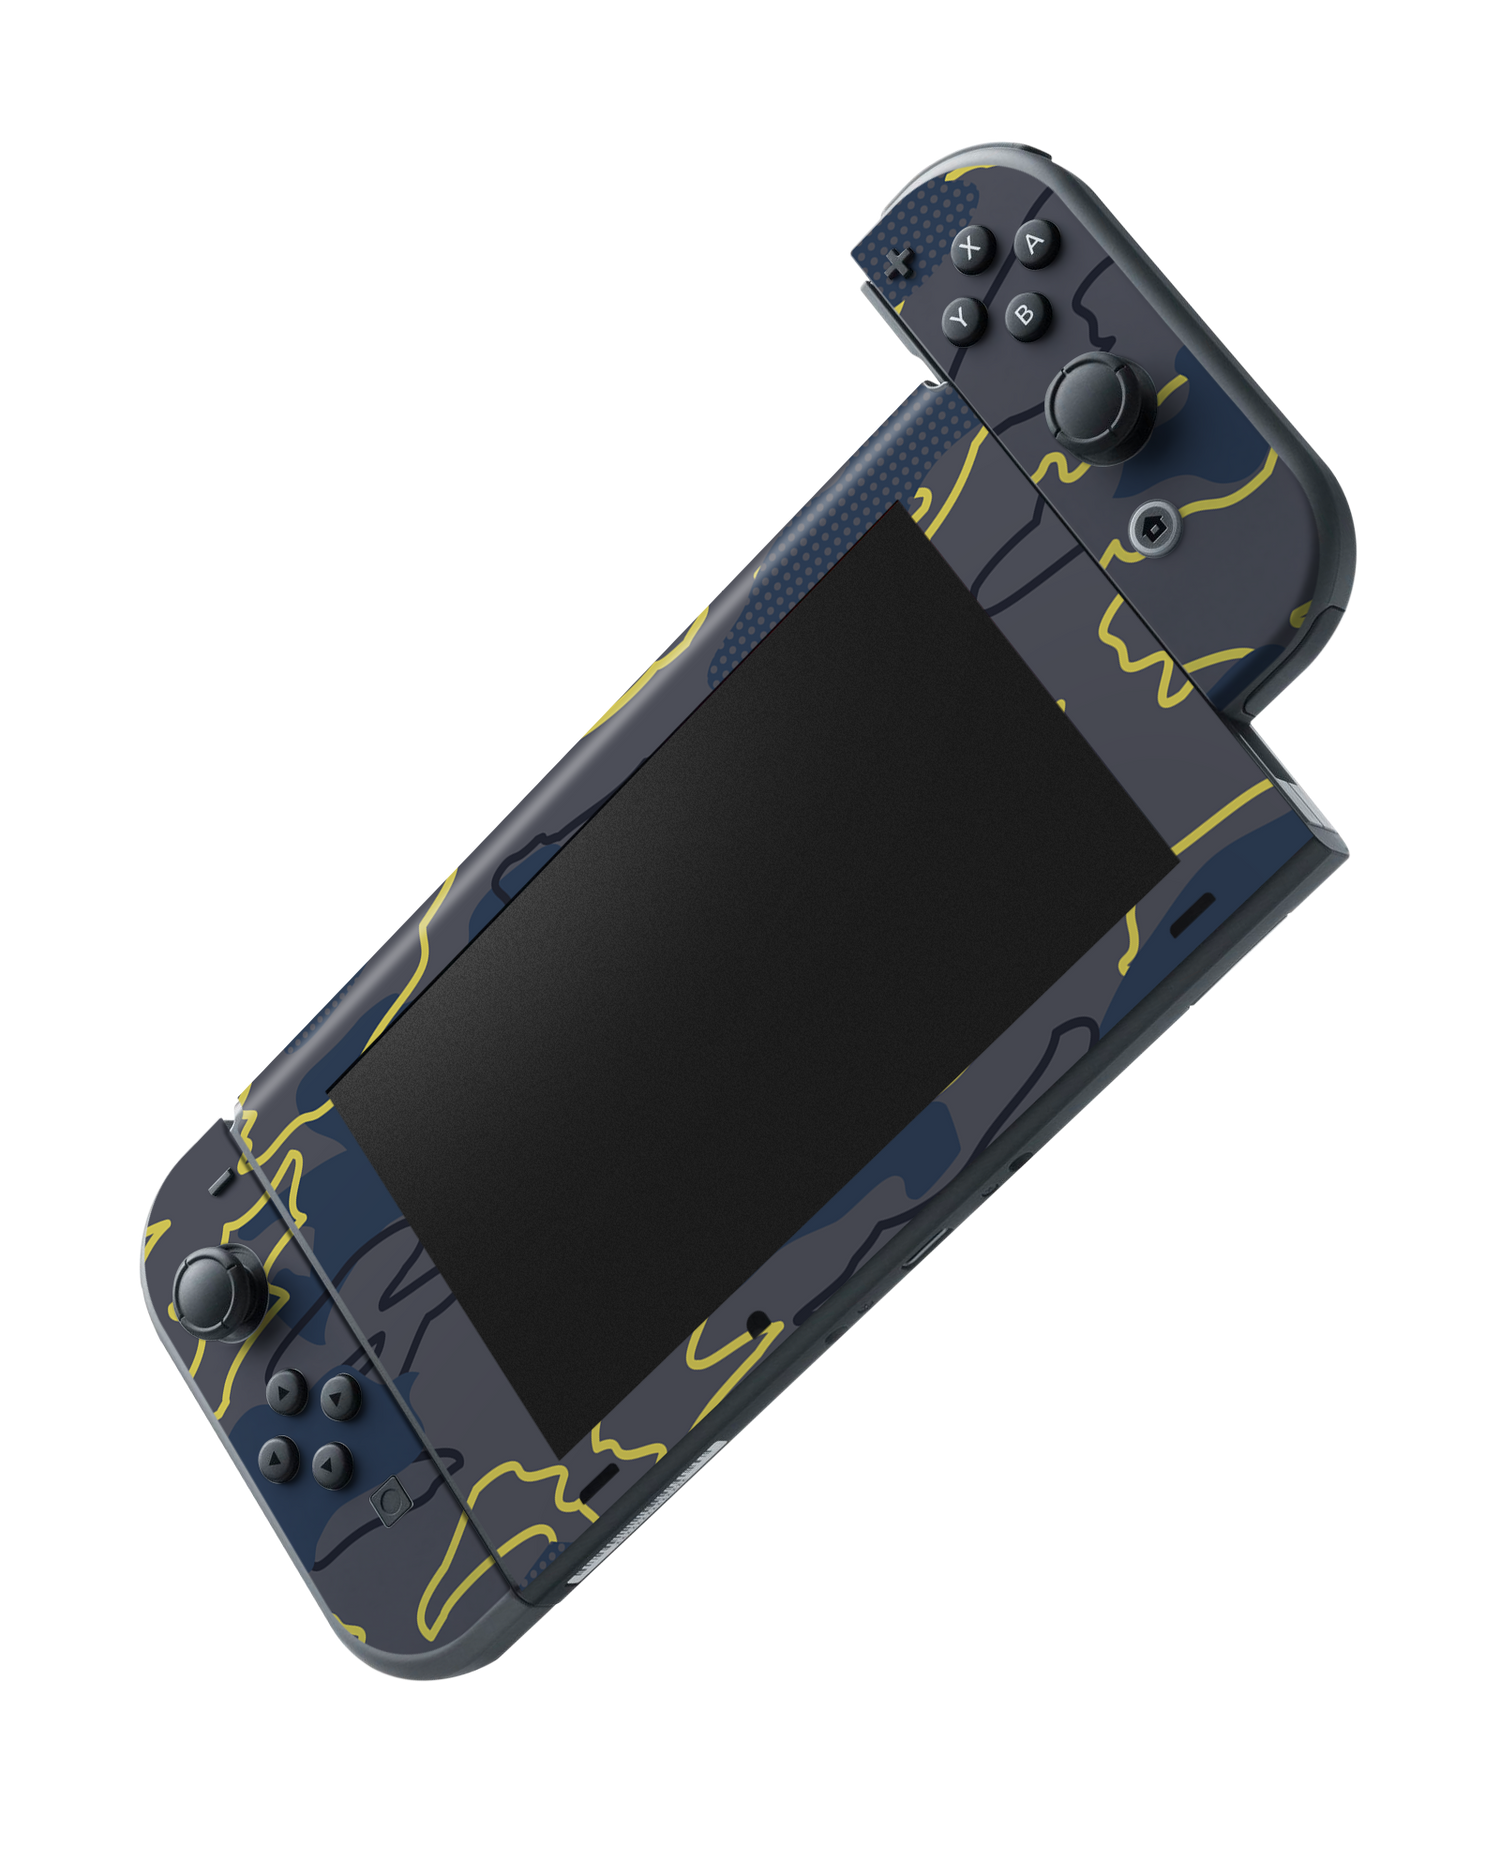 Linear Camo Console Skin for Nintendo Switch: Joy-Con removing 